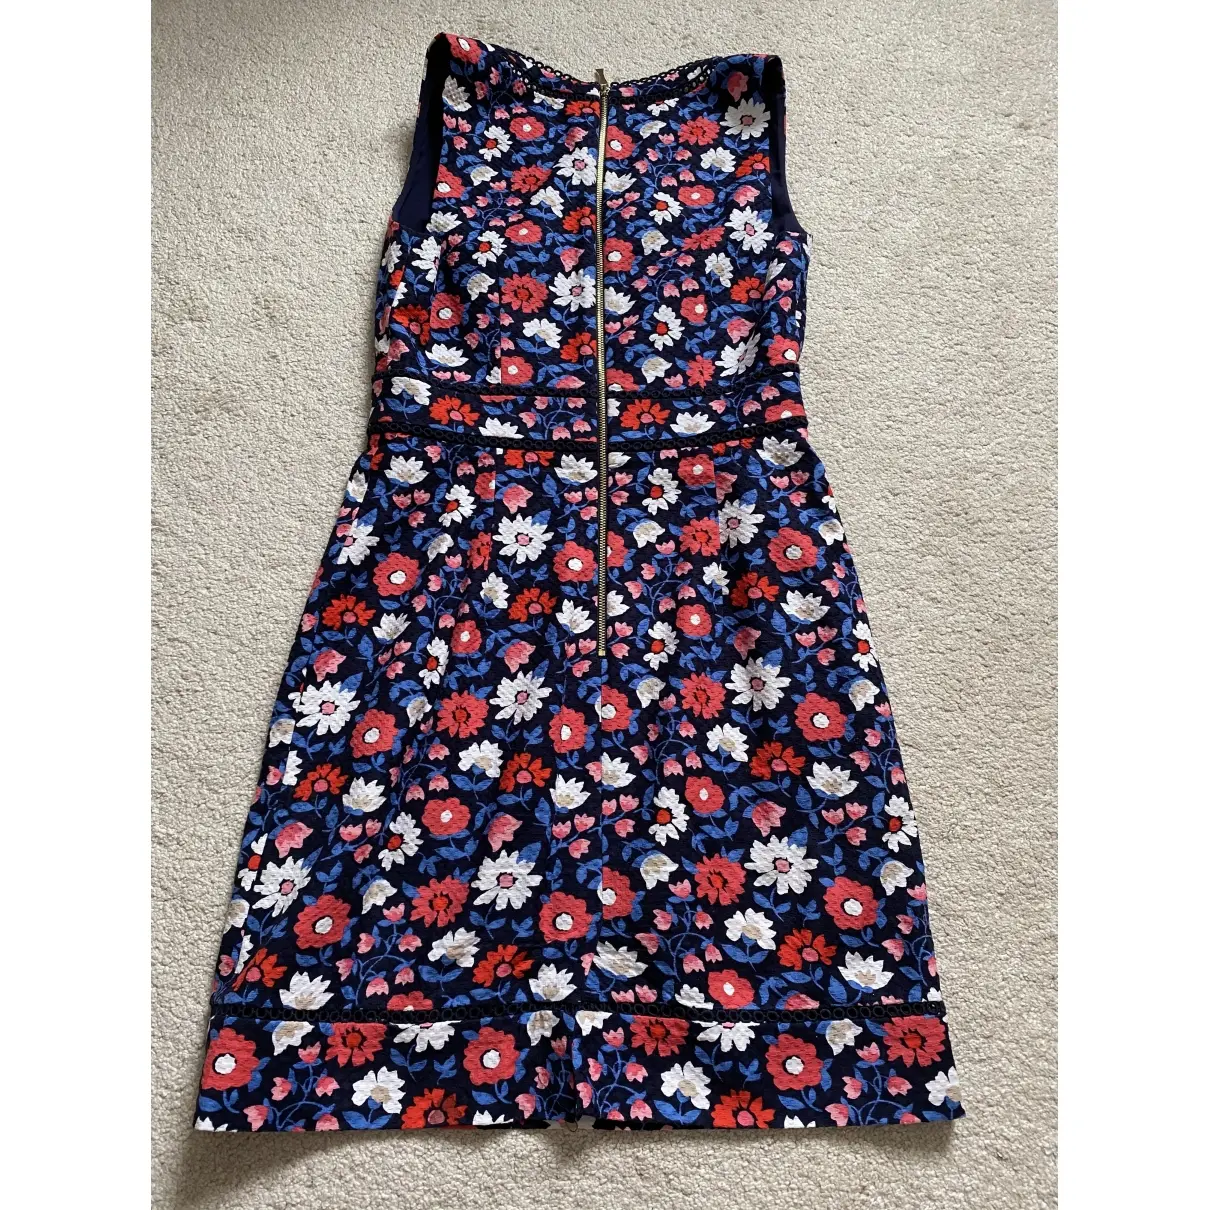 Buy Kate Spade Mini dress online